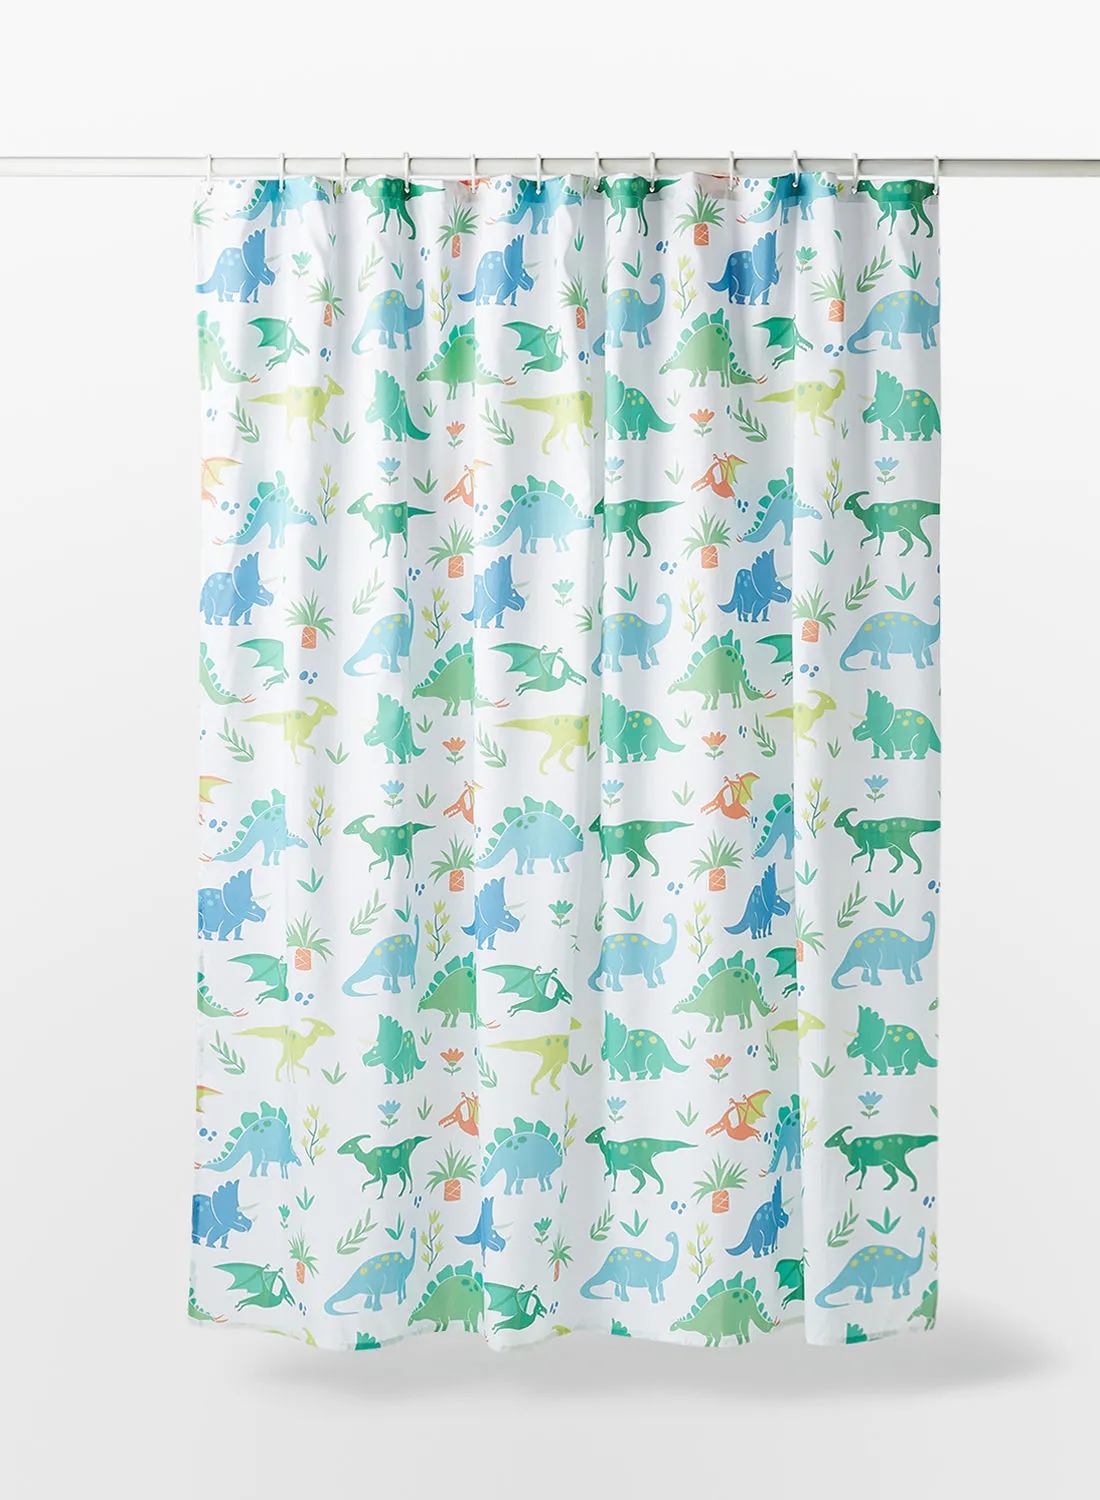 Bebi Shower Curtain - 180X180 Cm - 100% Printed Polyester Rings - Dino Color - Bath Curtain